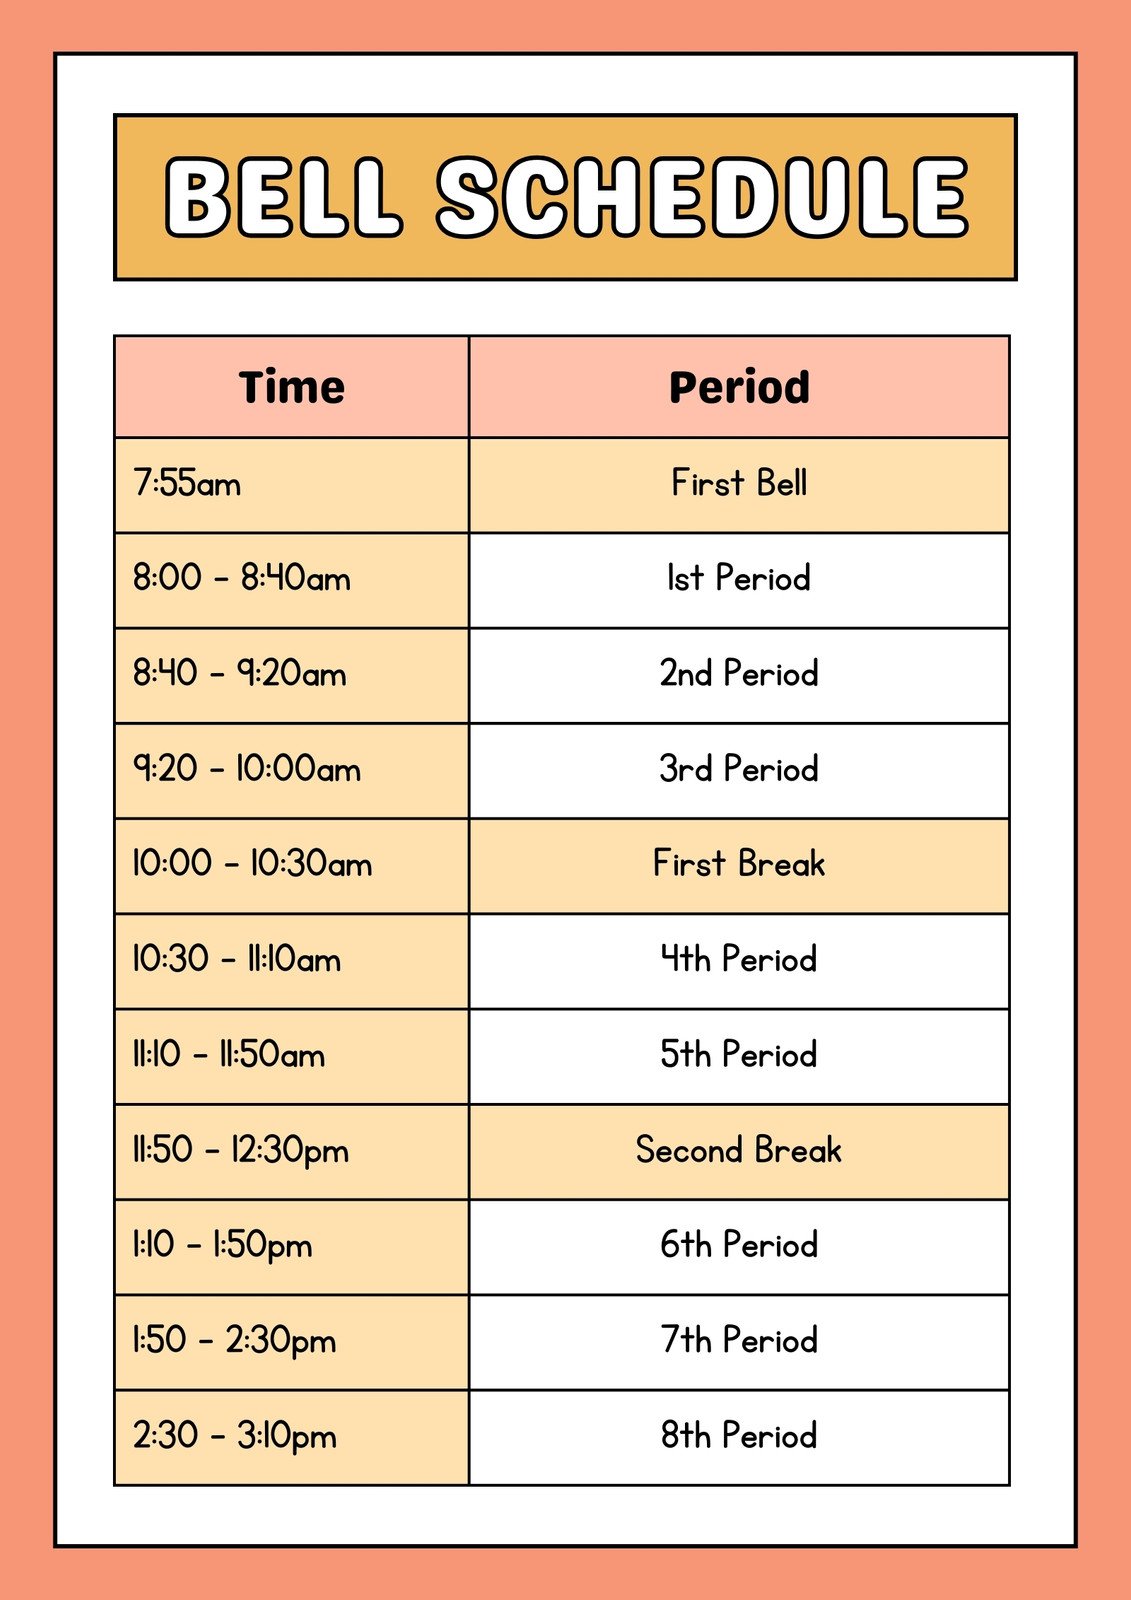 School Bell Schedule Document in Orange Yellow Bold Style 